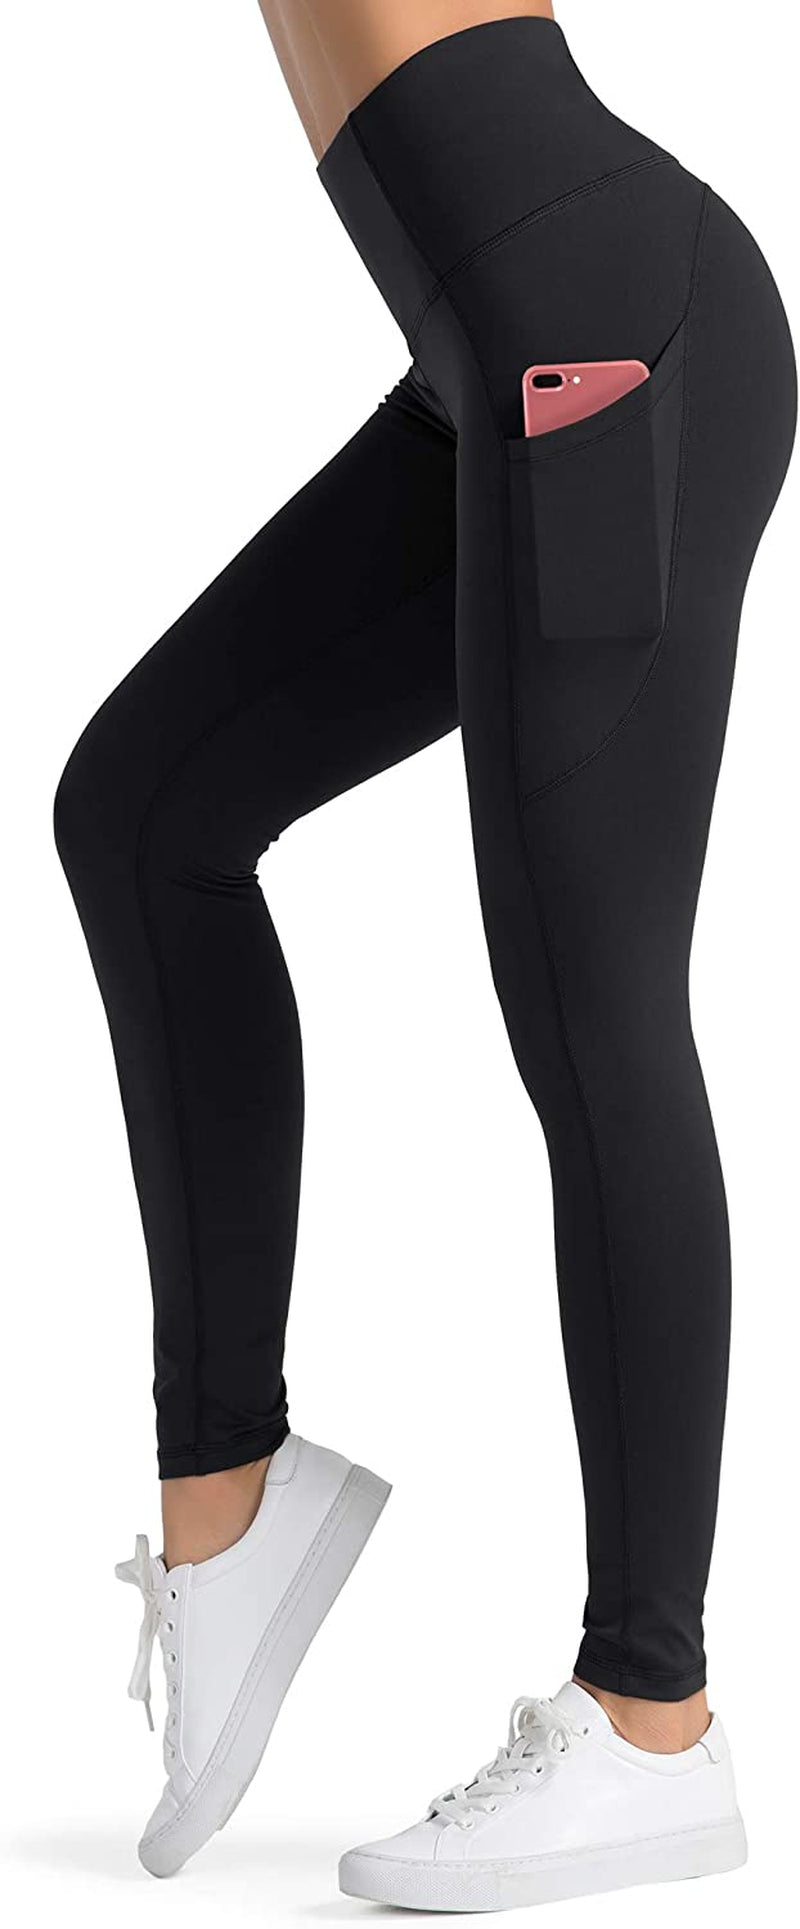  High Waist Yoga Pants, Pocket Yoga Pants Tummy Control  Workout Running 4 Way Stretch Yoga Leggings Lilac